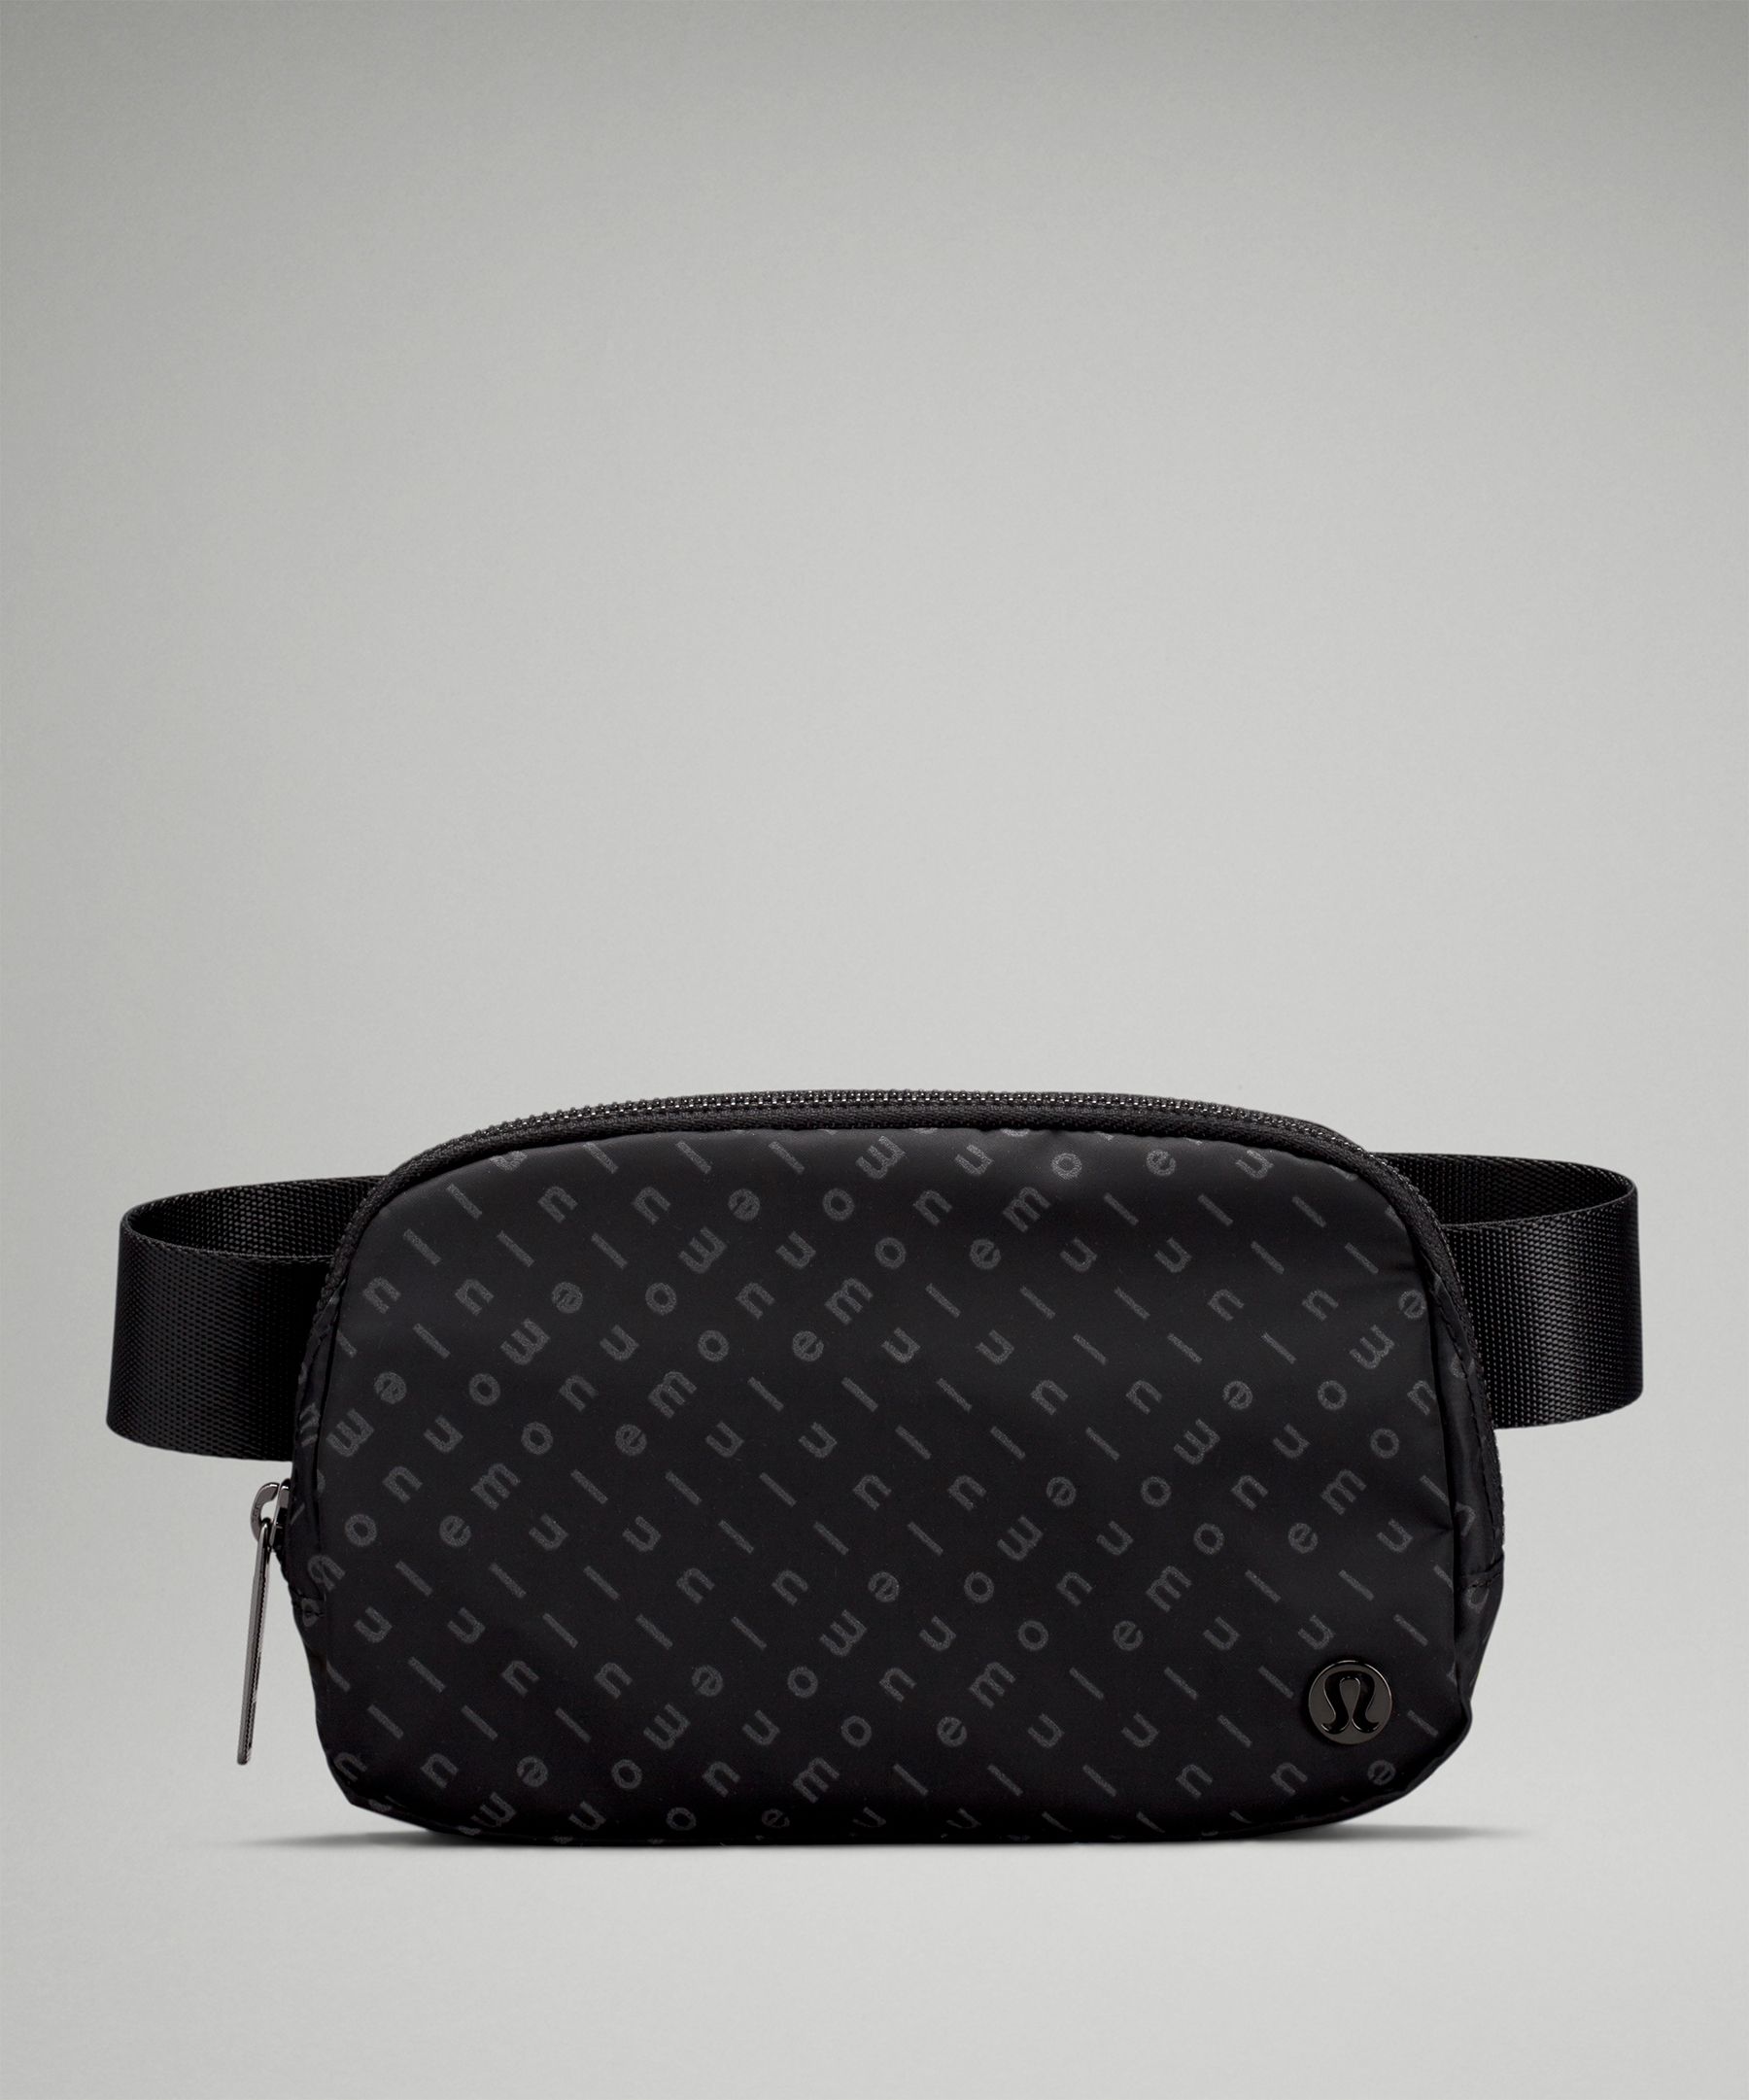 Lululemon Everywhere Belt Bag 1l In Mirrorify Reflective Black/black